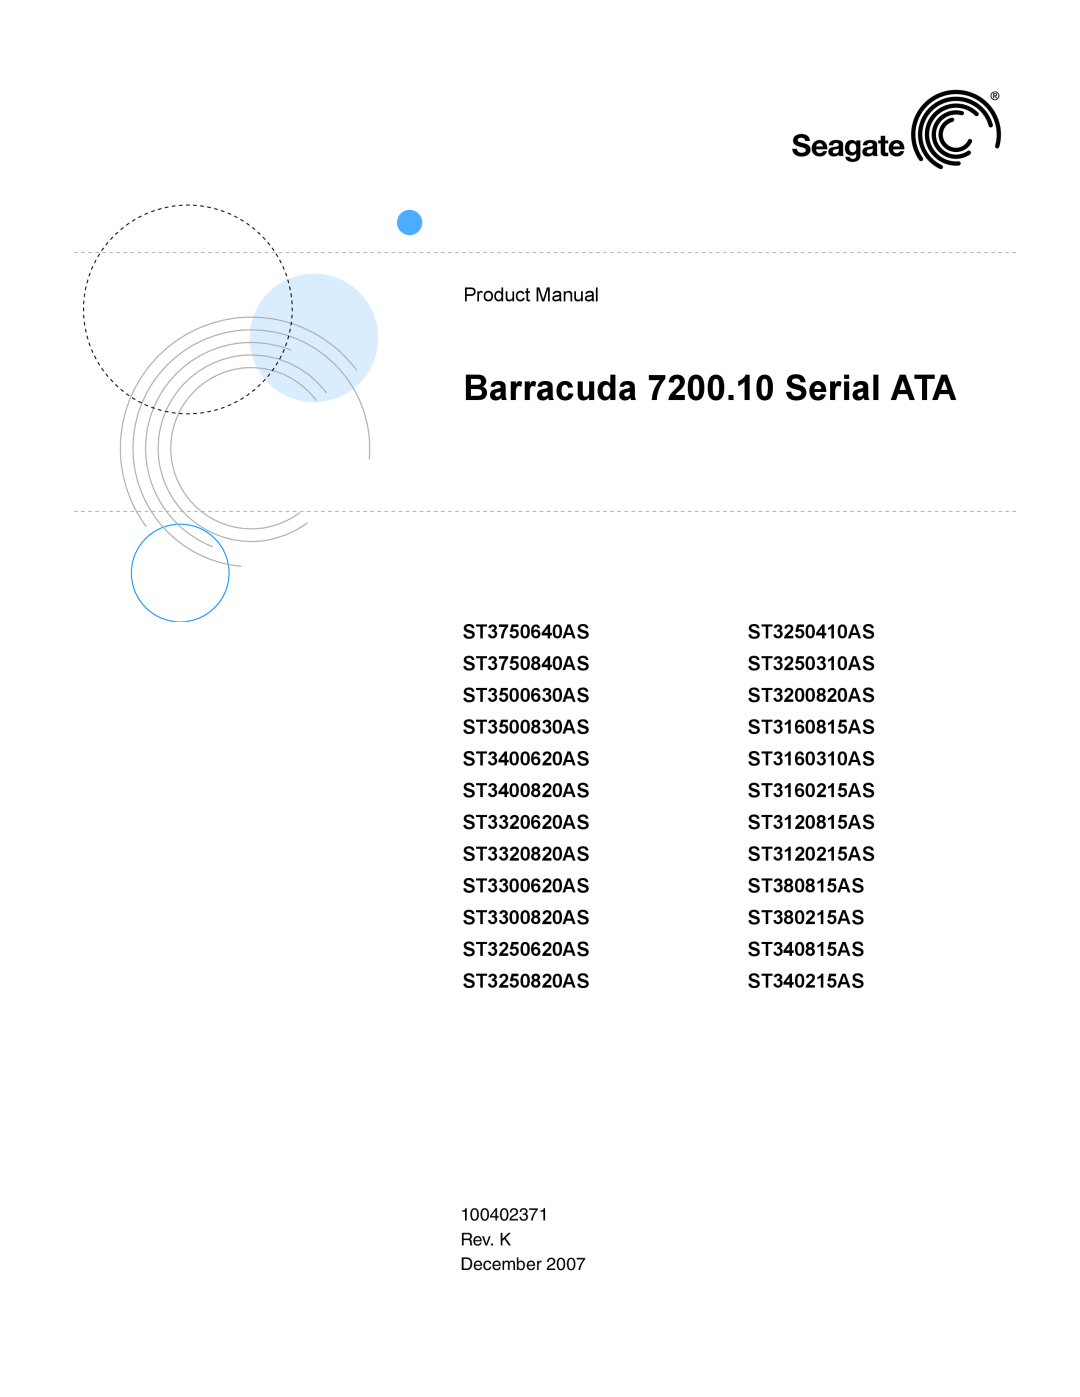 Seagate ST3120815AS, ST3120215AS, ST3160815AS, ST3160215AS, ST3250310AS, ST3200820AS manual Barracuda 7200.10 Serial ATA 